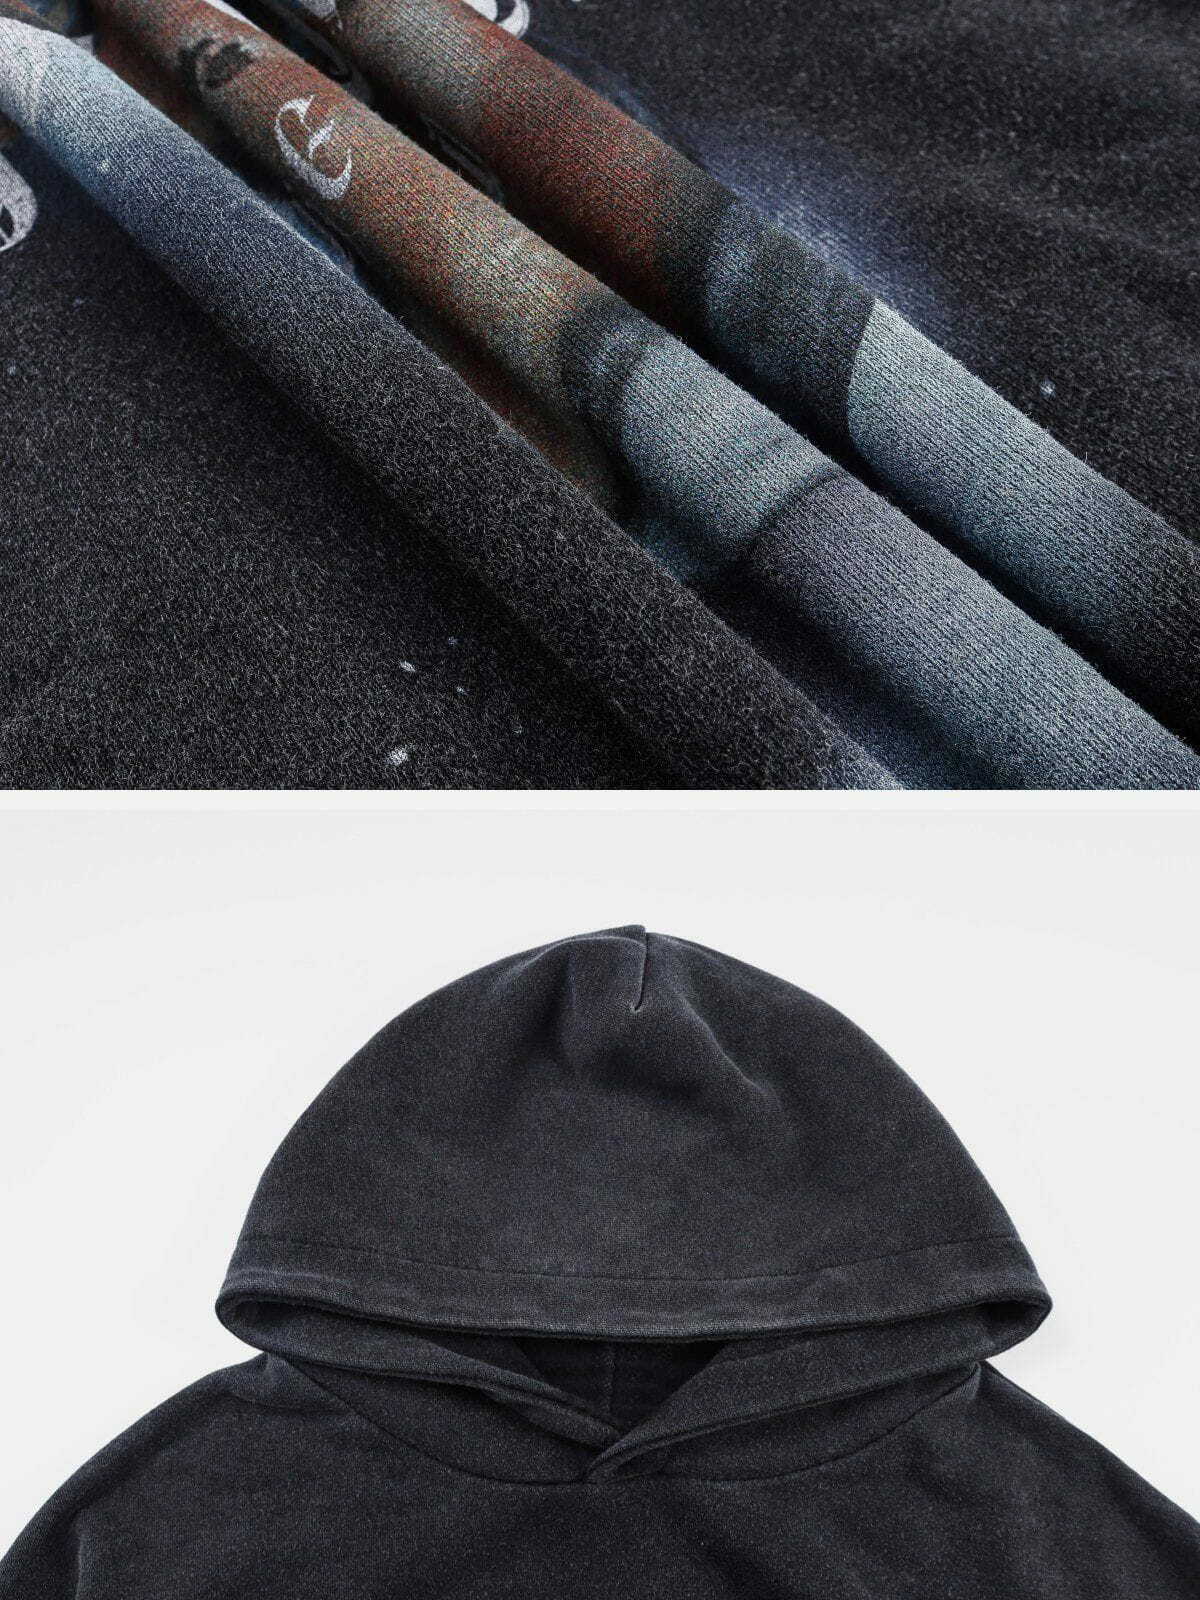 earthprint hoodie vintage & quirky y2k fashion 2690